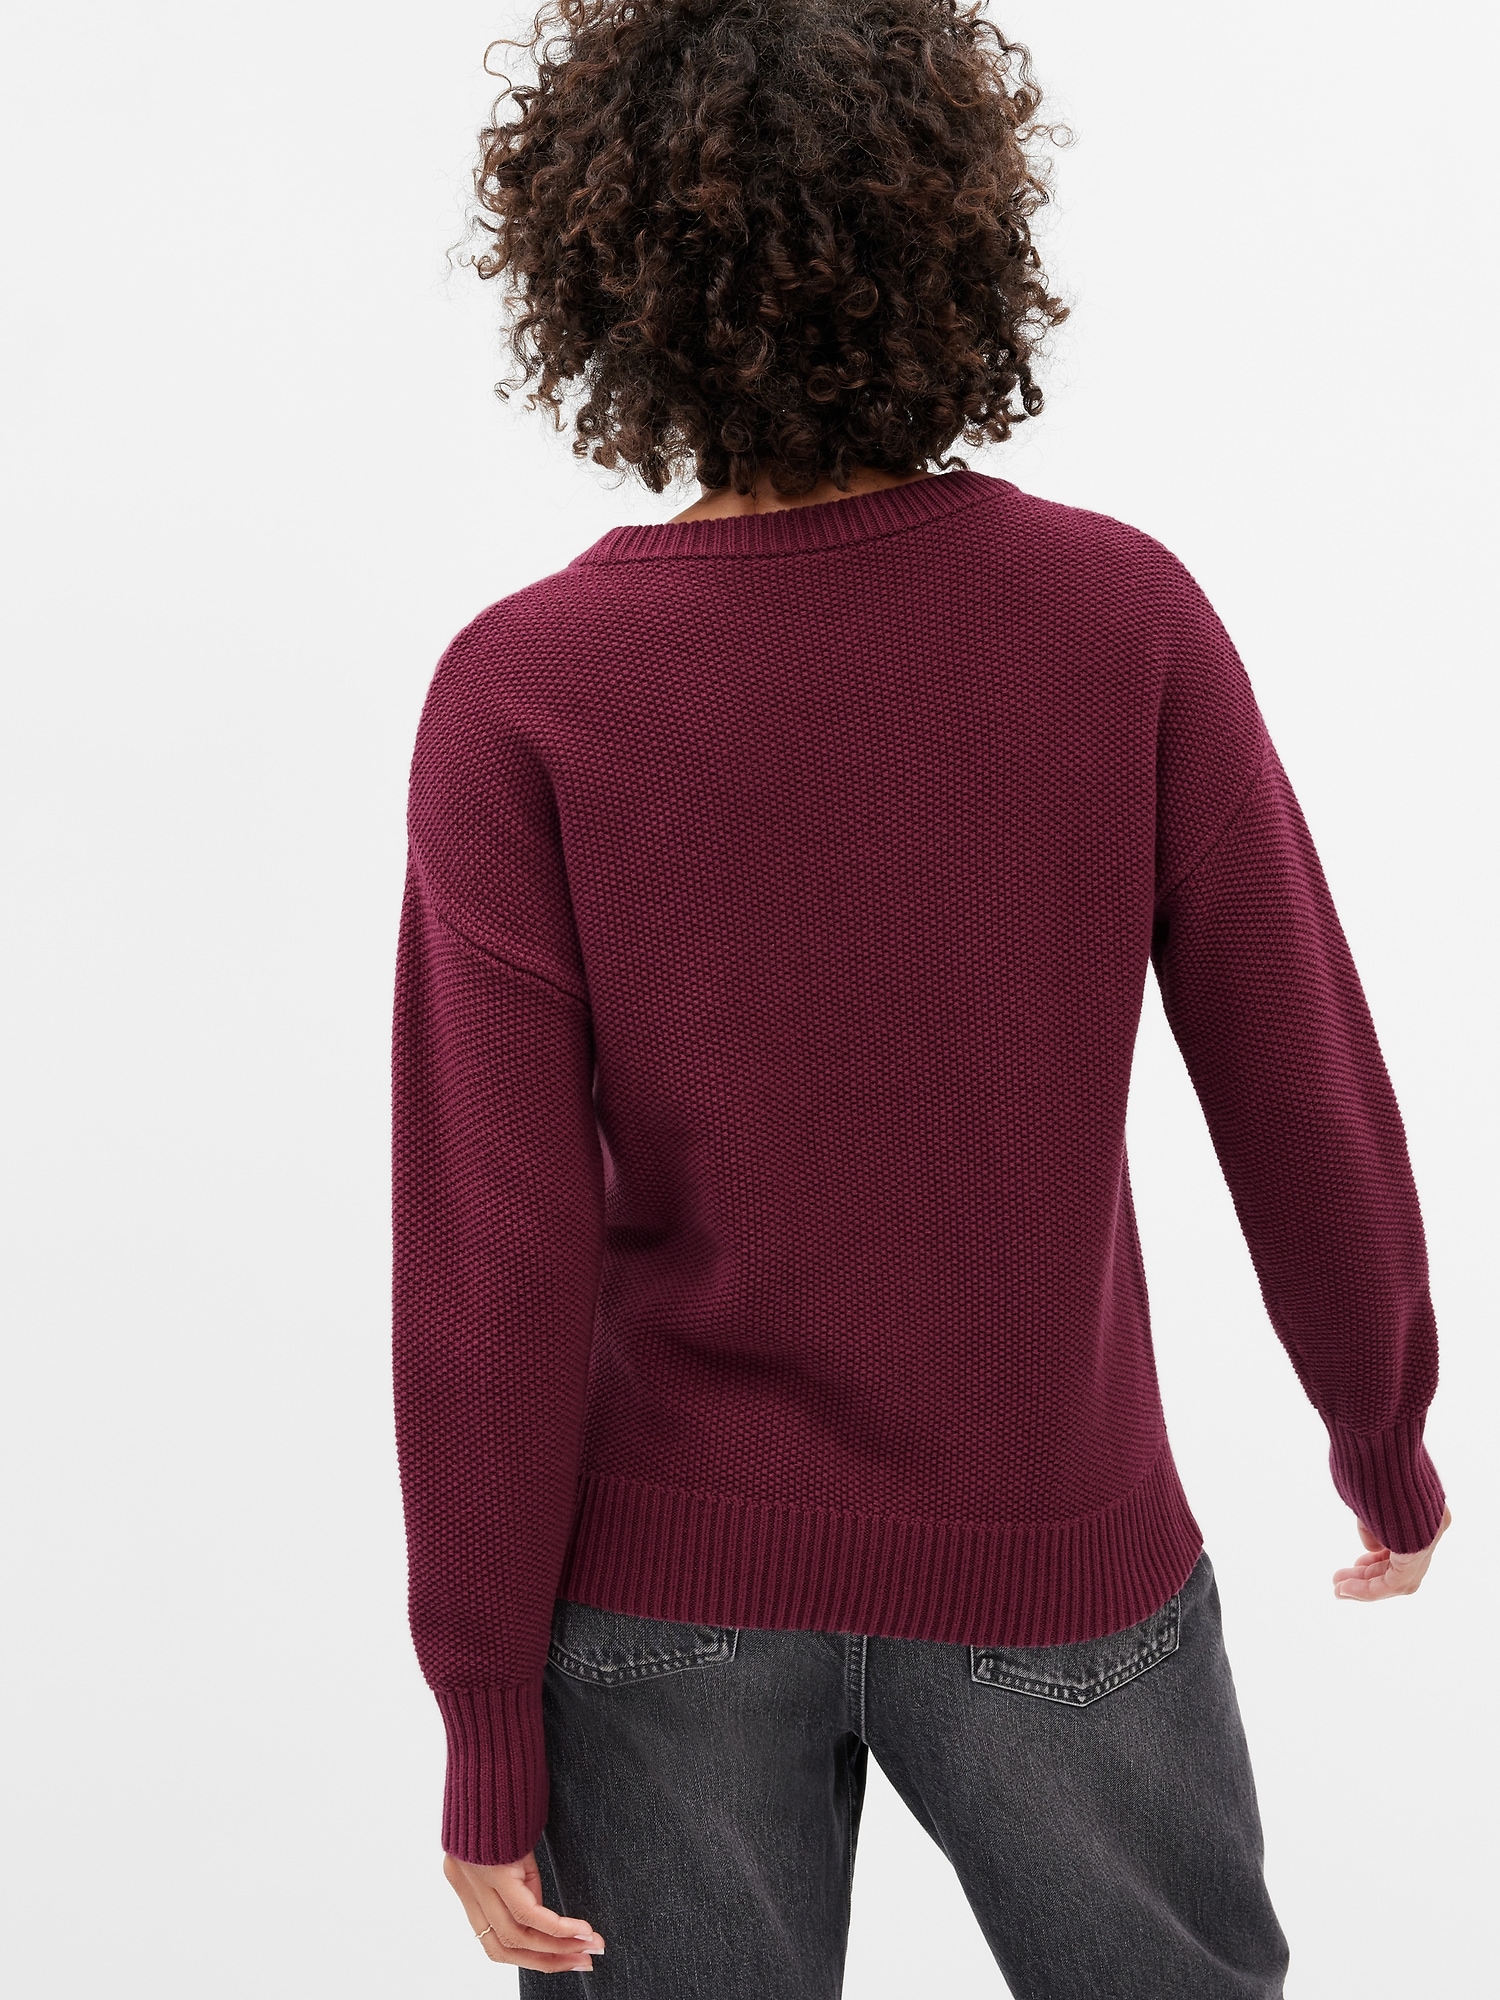 Cable-Knit Crewneck Sweater | Gap Factory